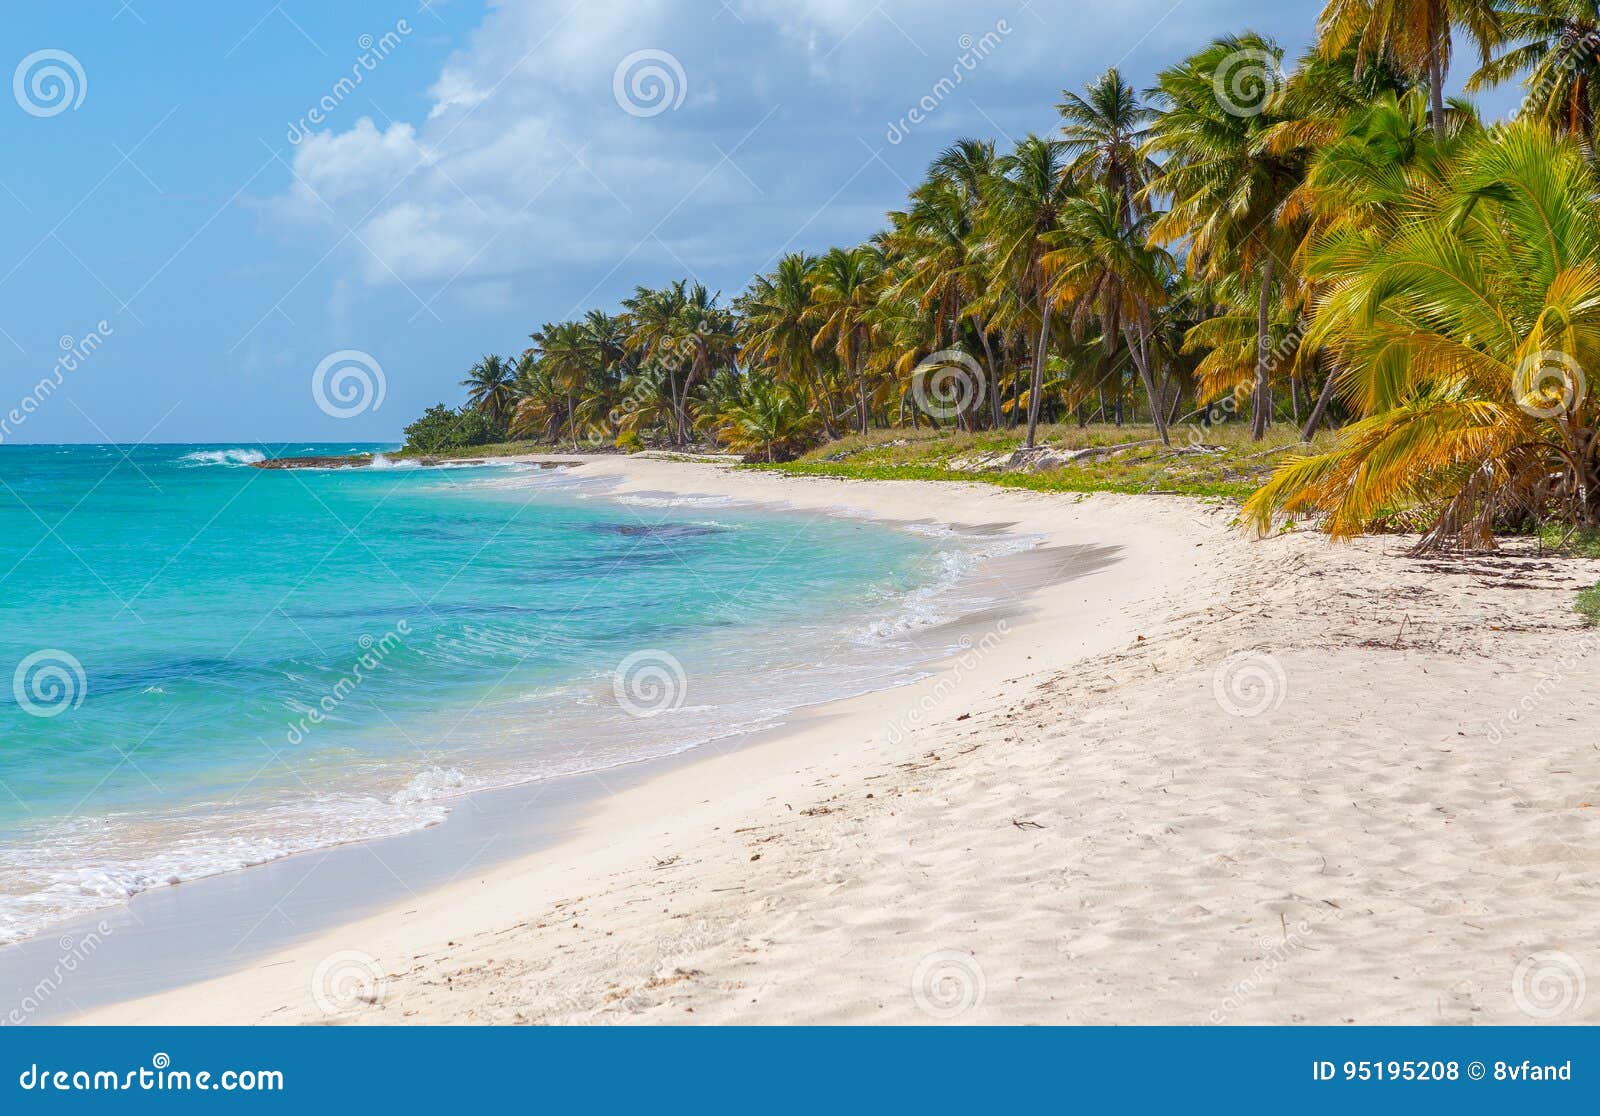 palm trees on the beach of isla saona